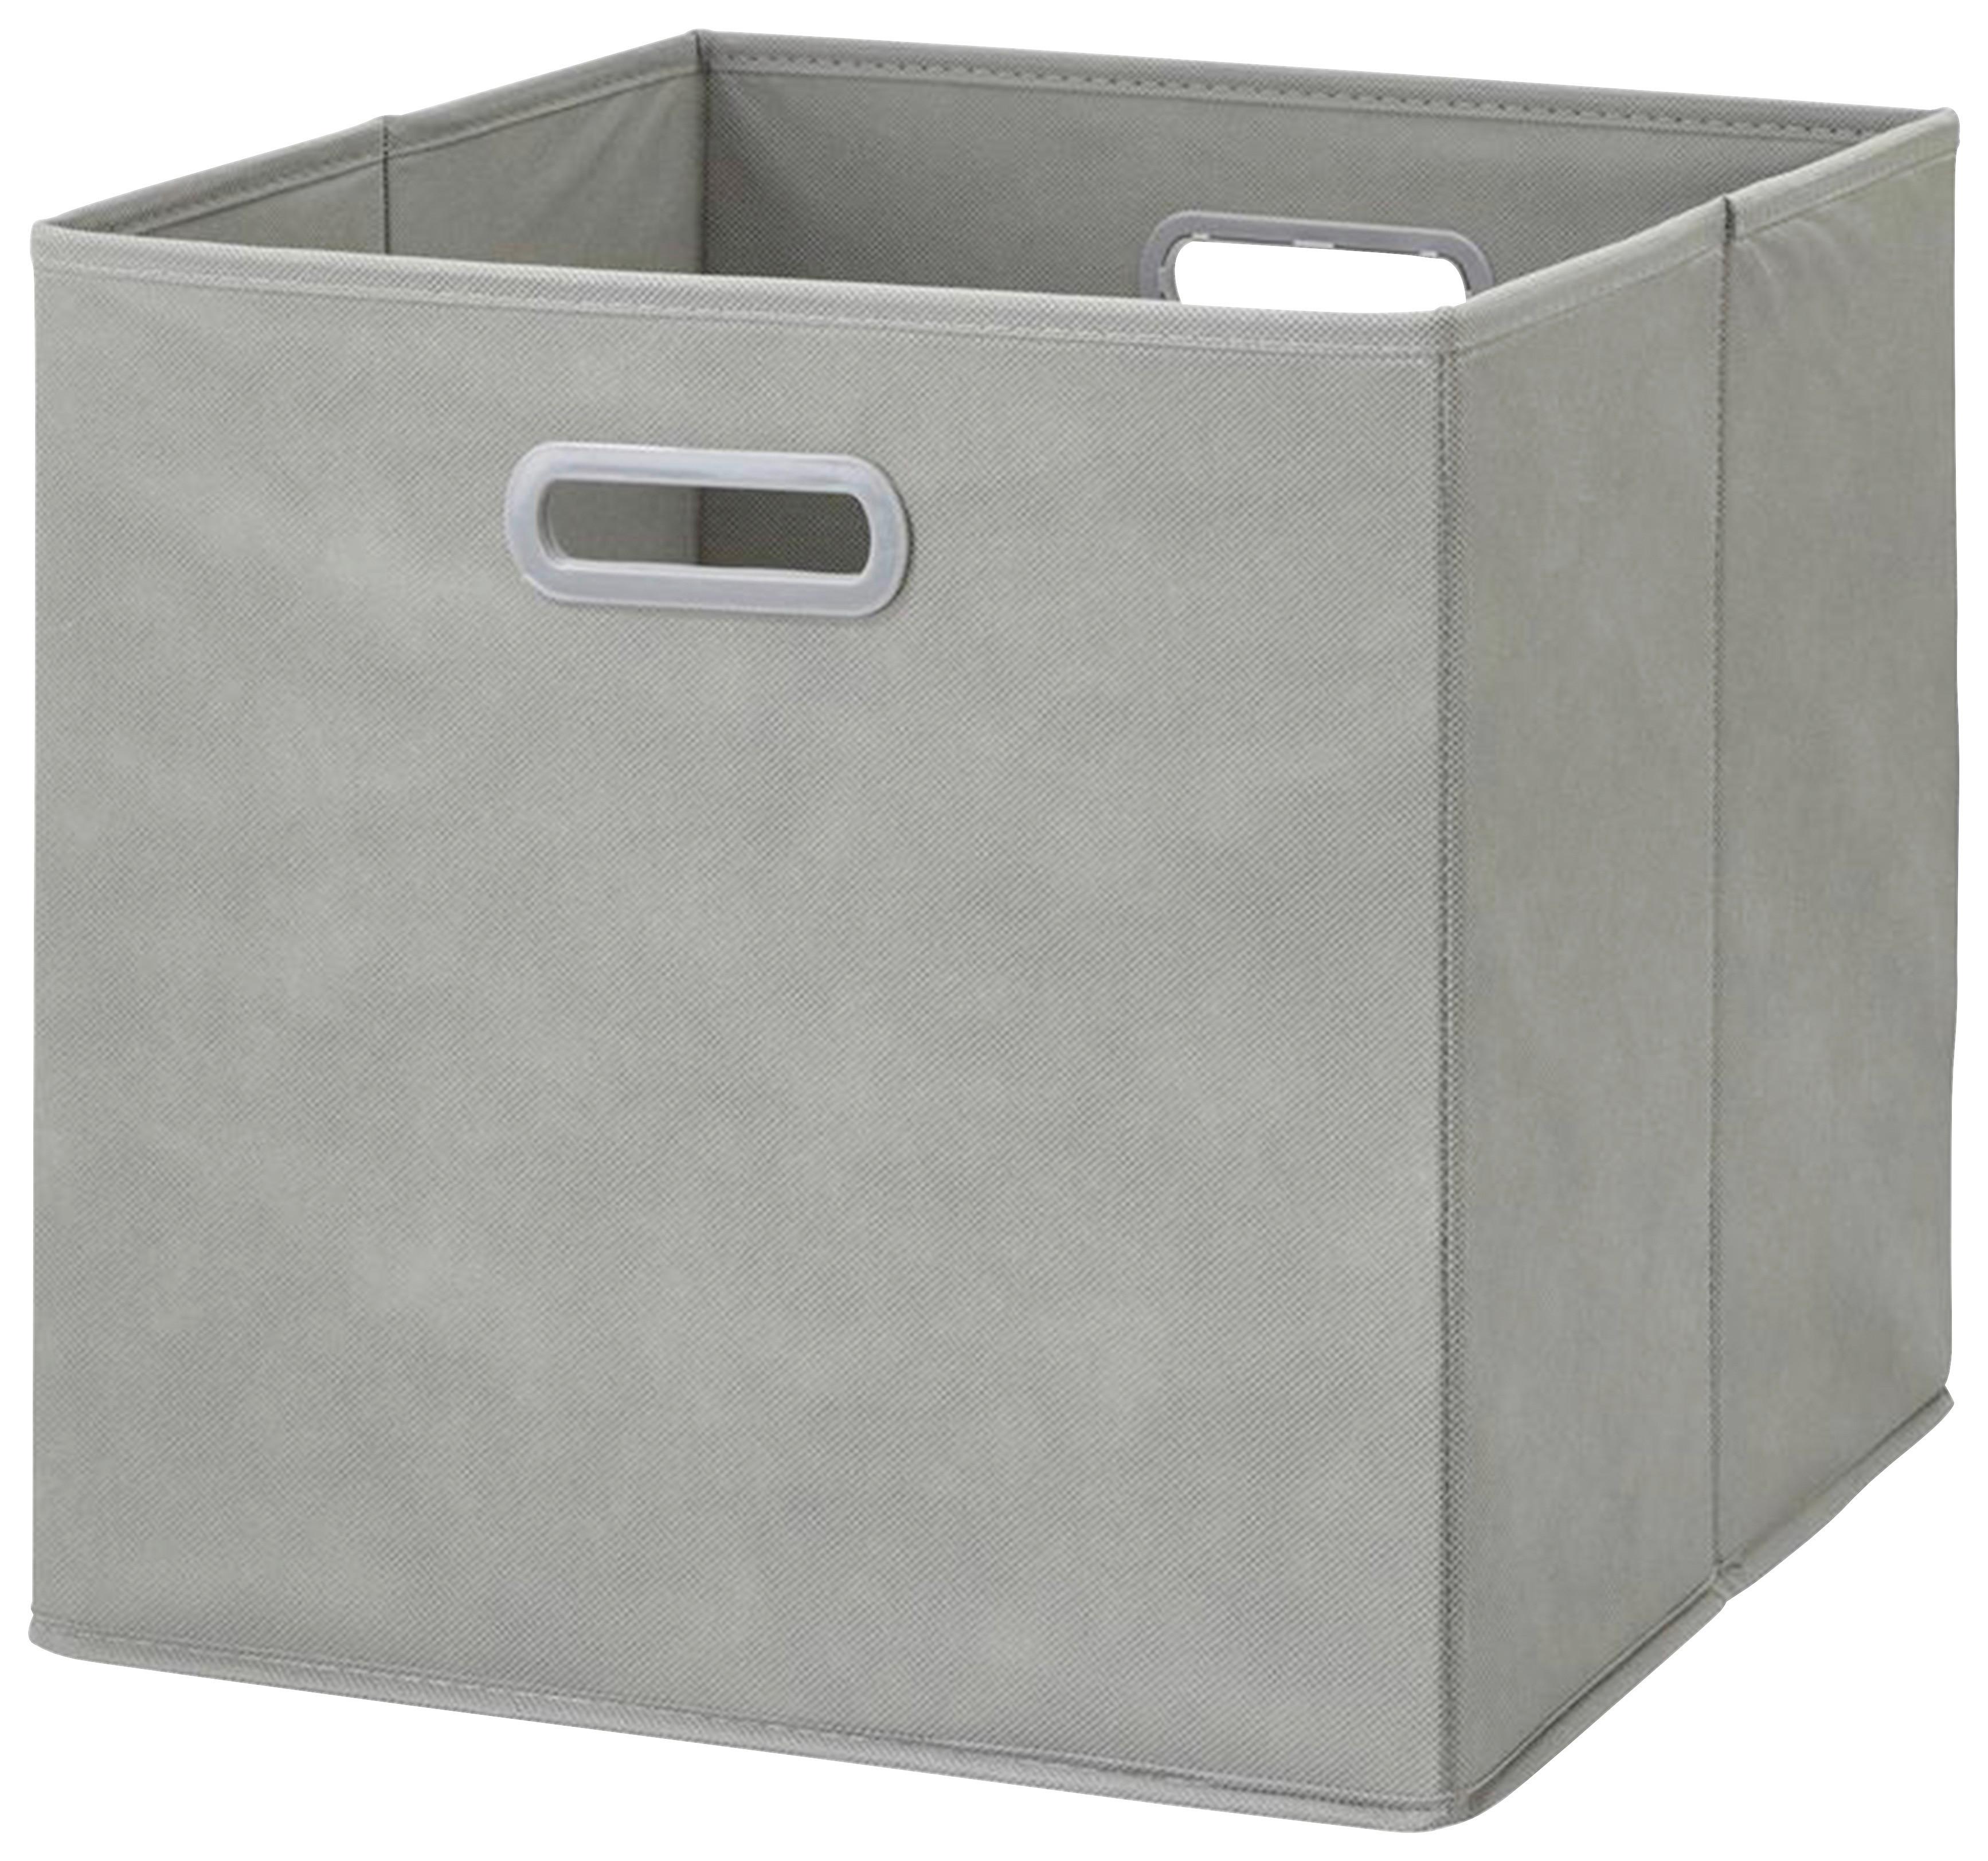 Skládací Krabice Elli, 33/33/32cm - šedá, Konvenční, karton/textil (33/33/32cm) - Modern Living